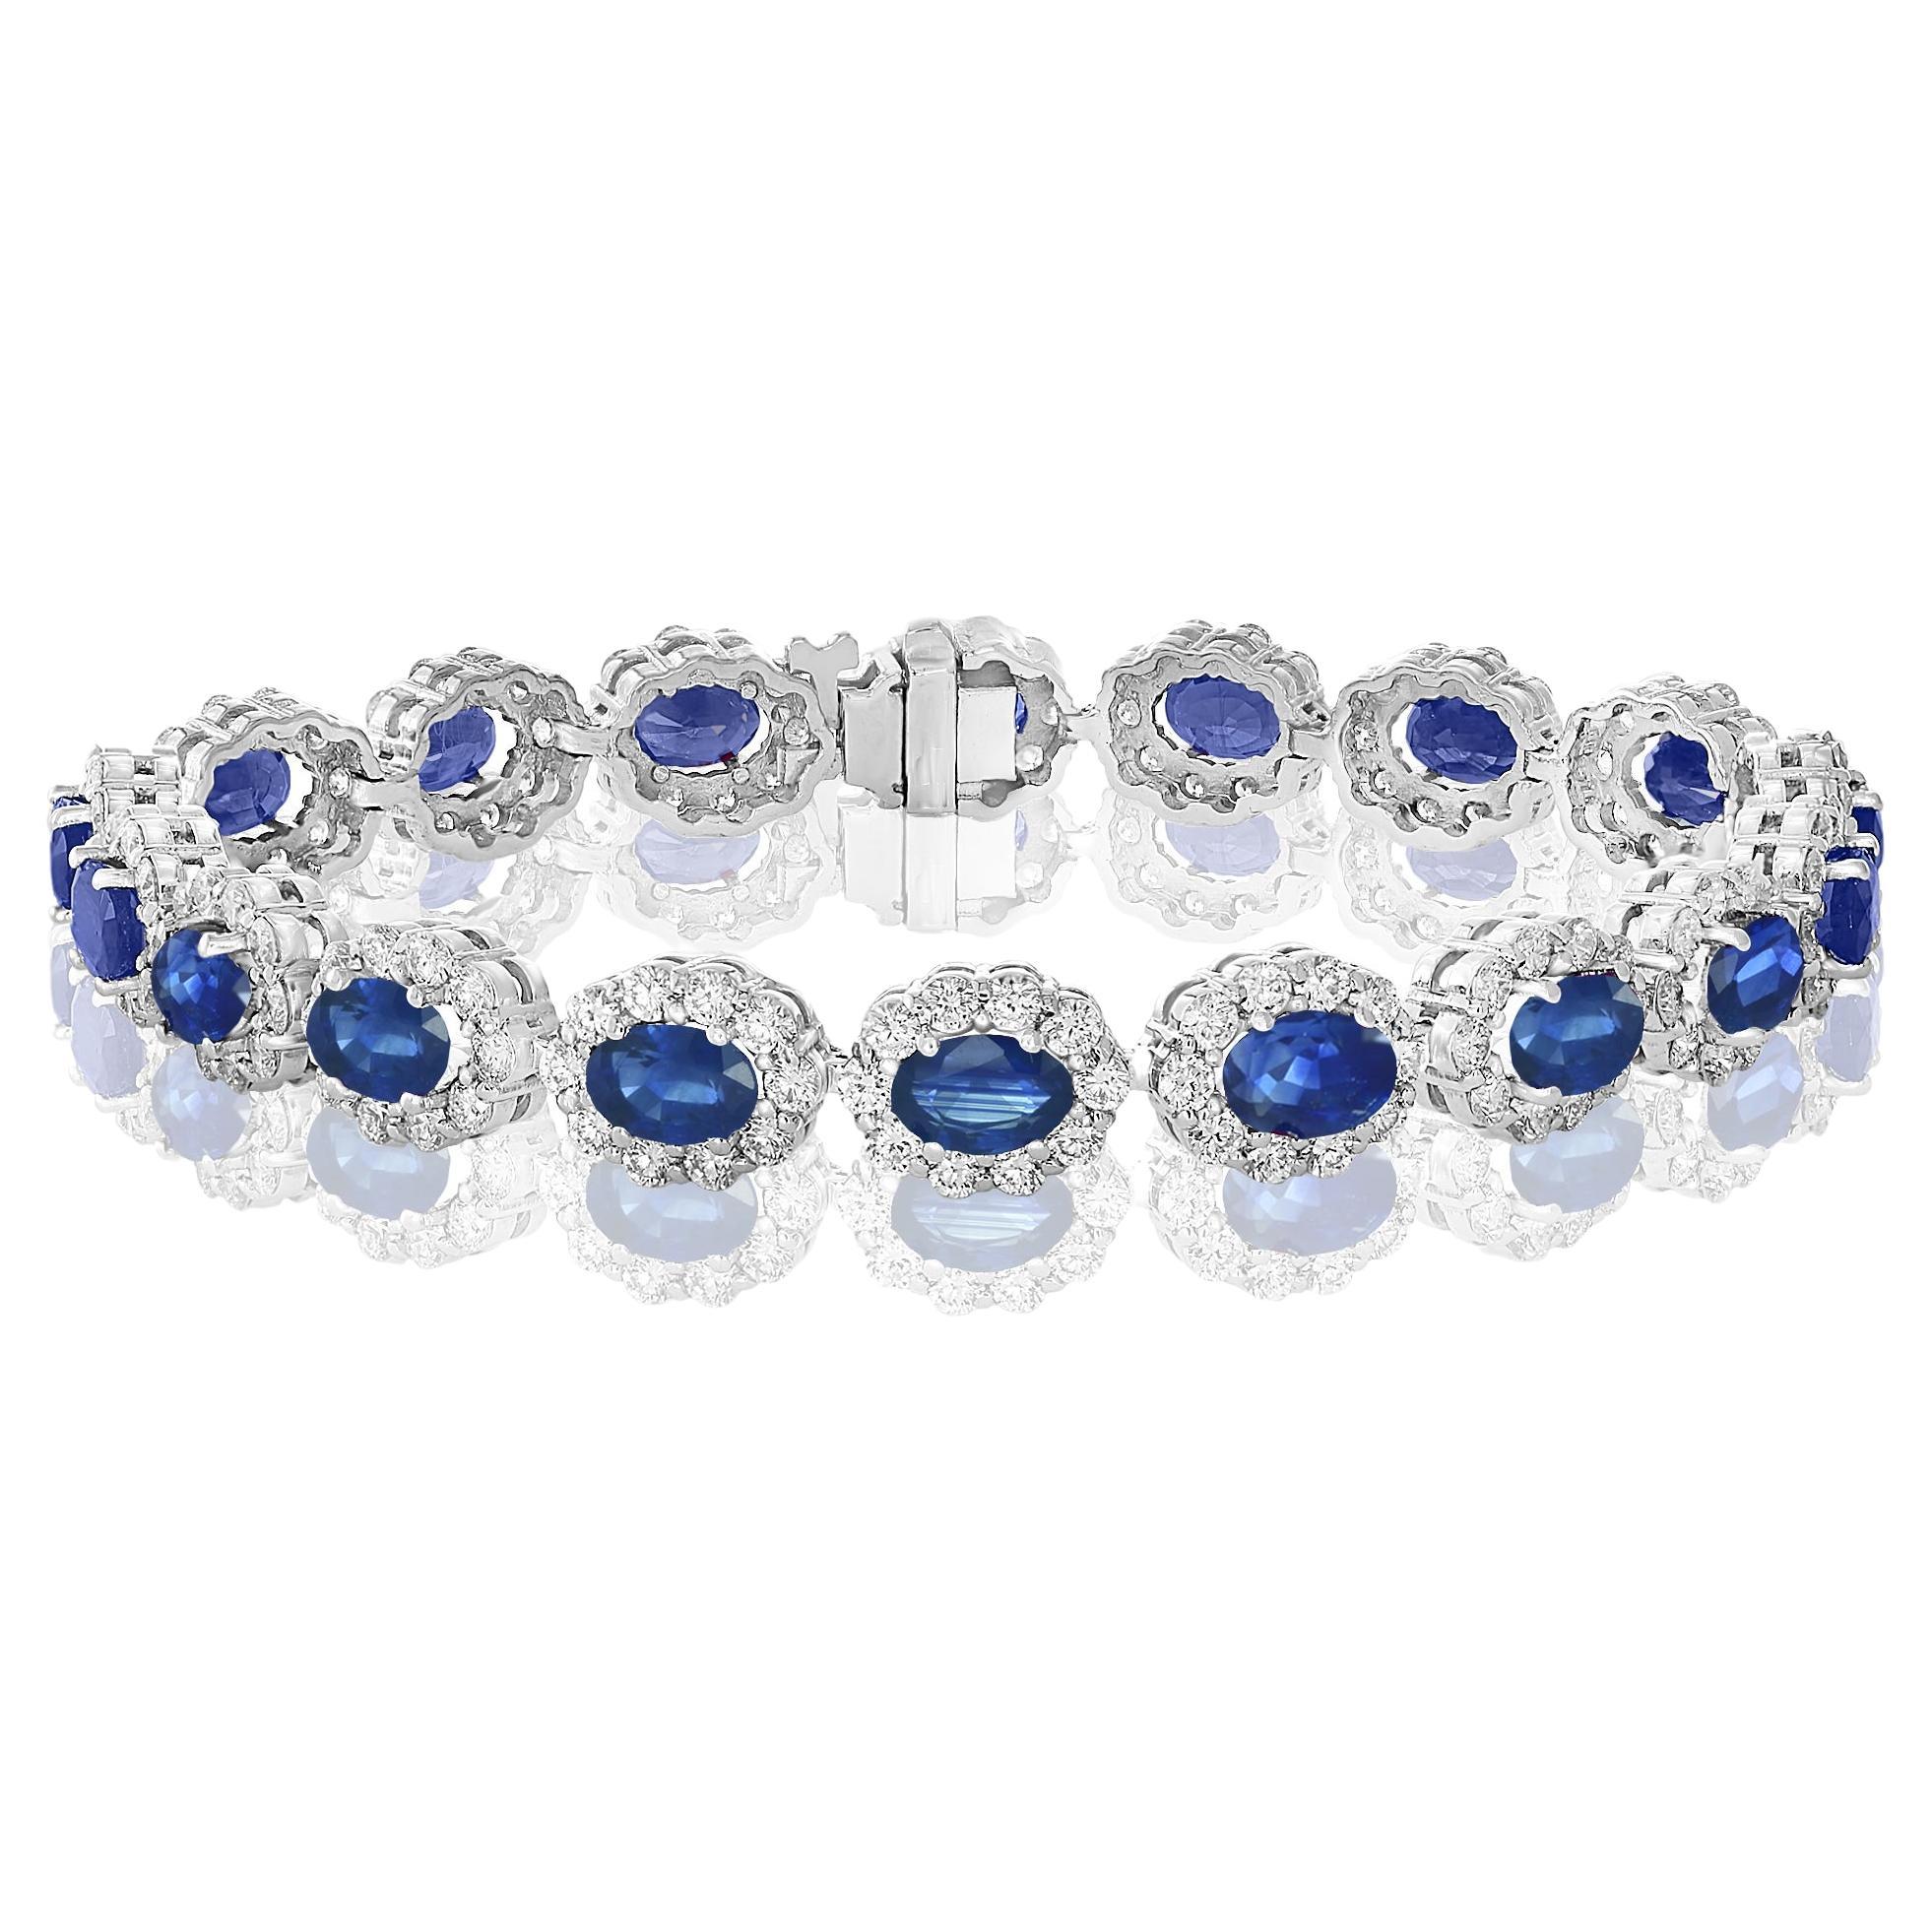 13.88 Carat Oval Cut Blue Sapphire and Diamond Halo Bracelet in 14K White Gold